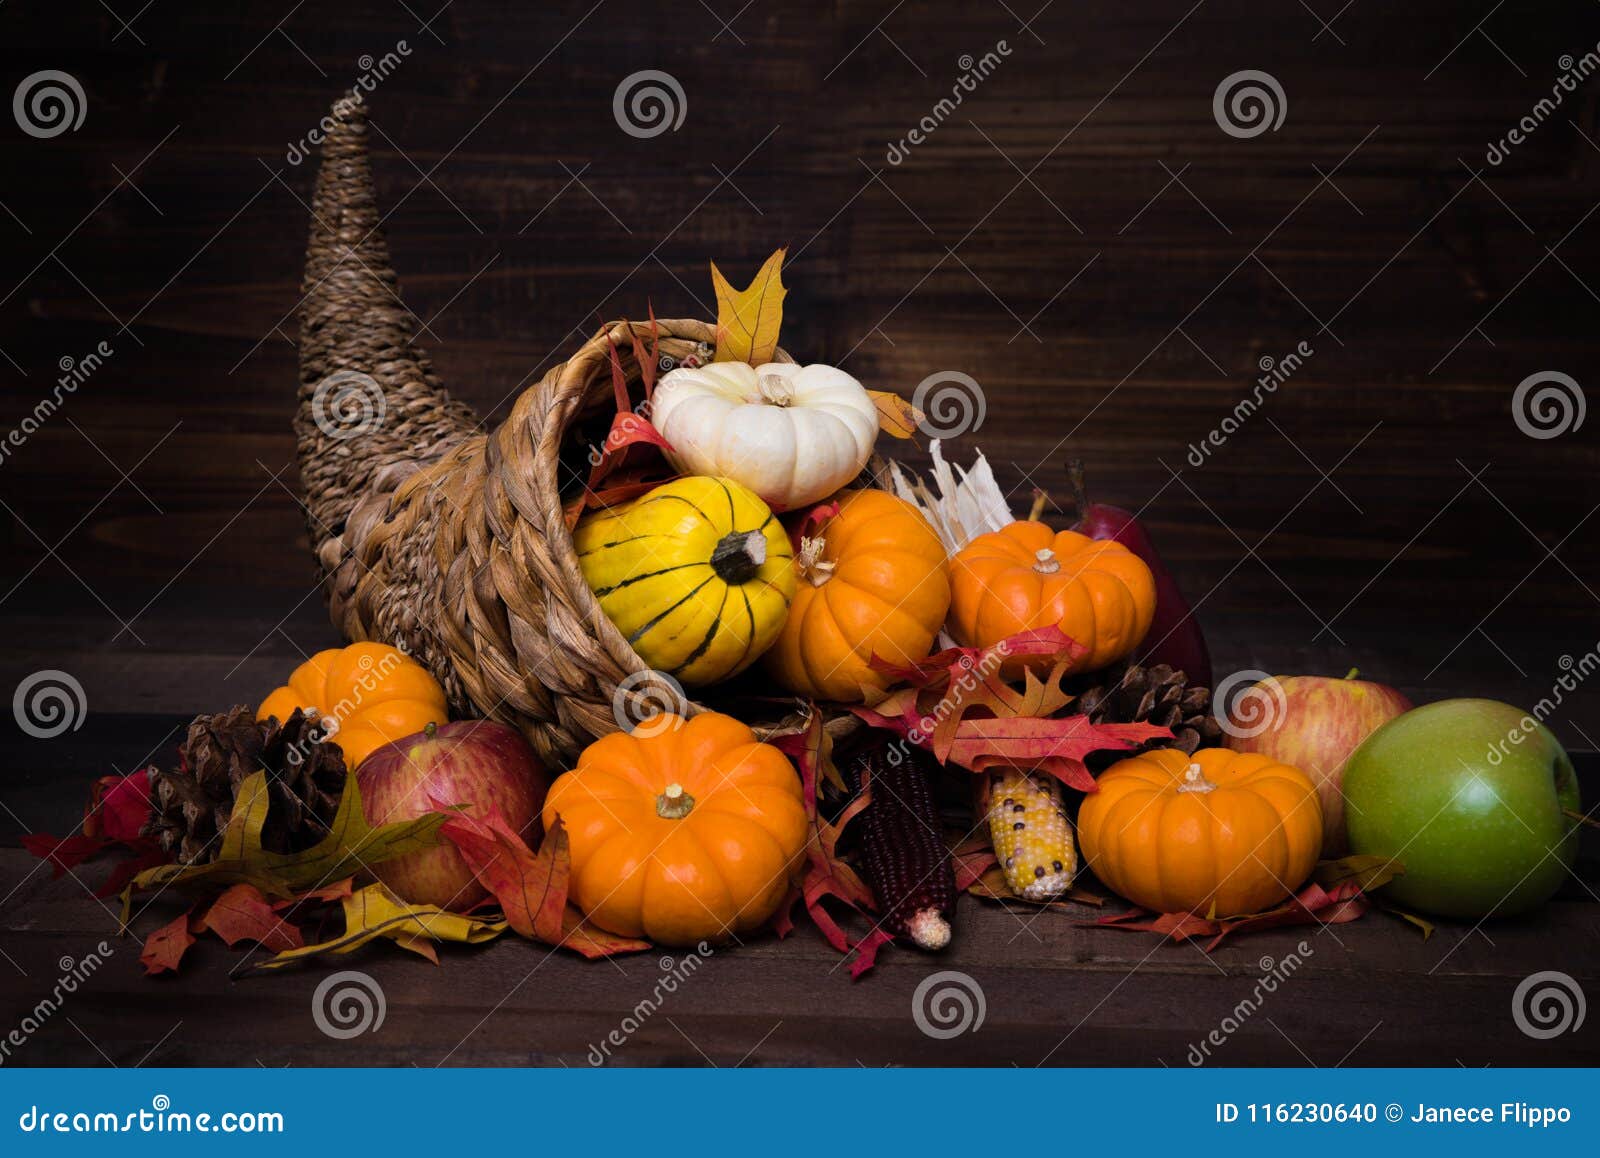 thanksgiving or fall cornucopia